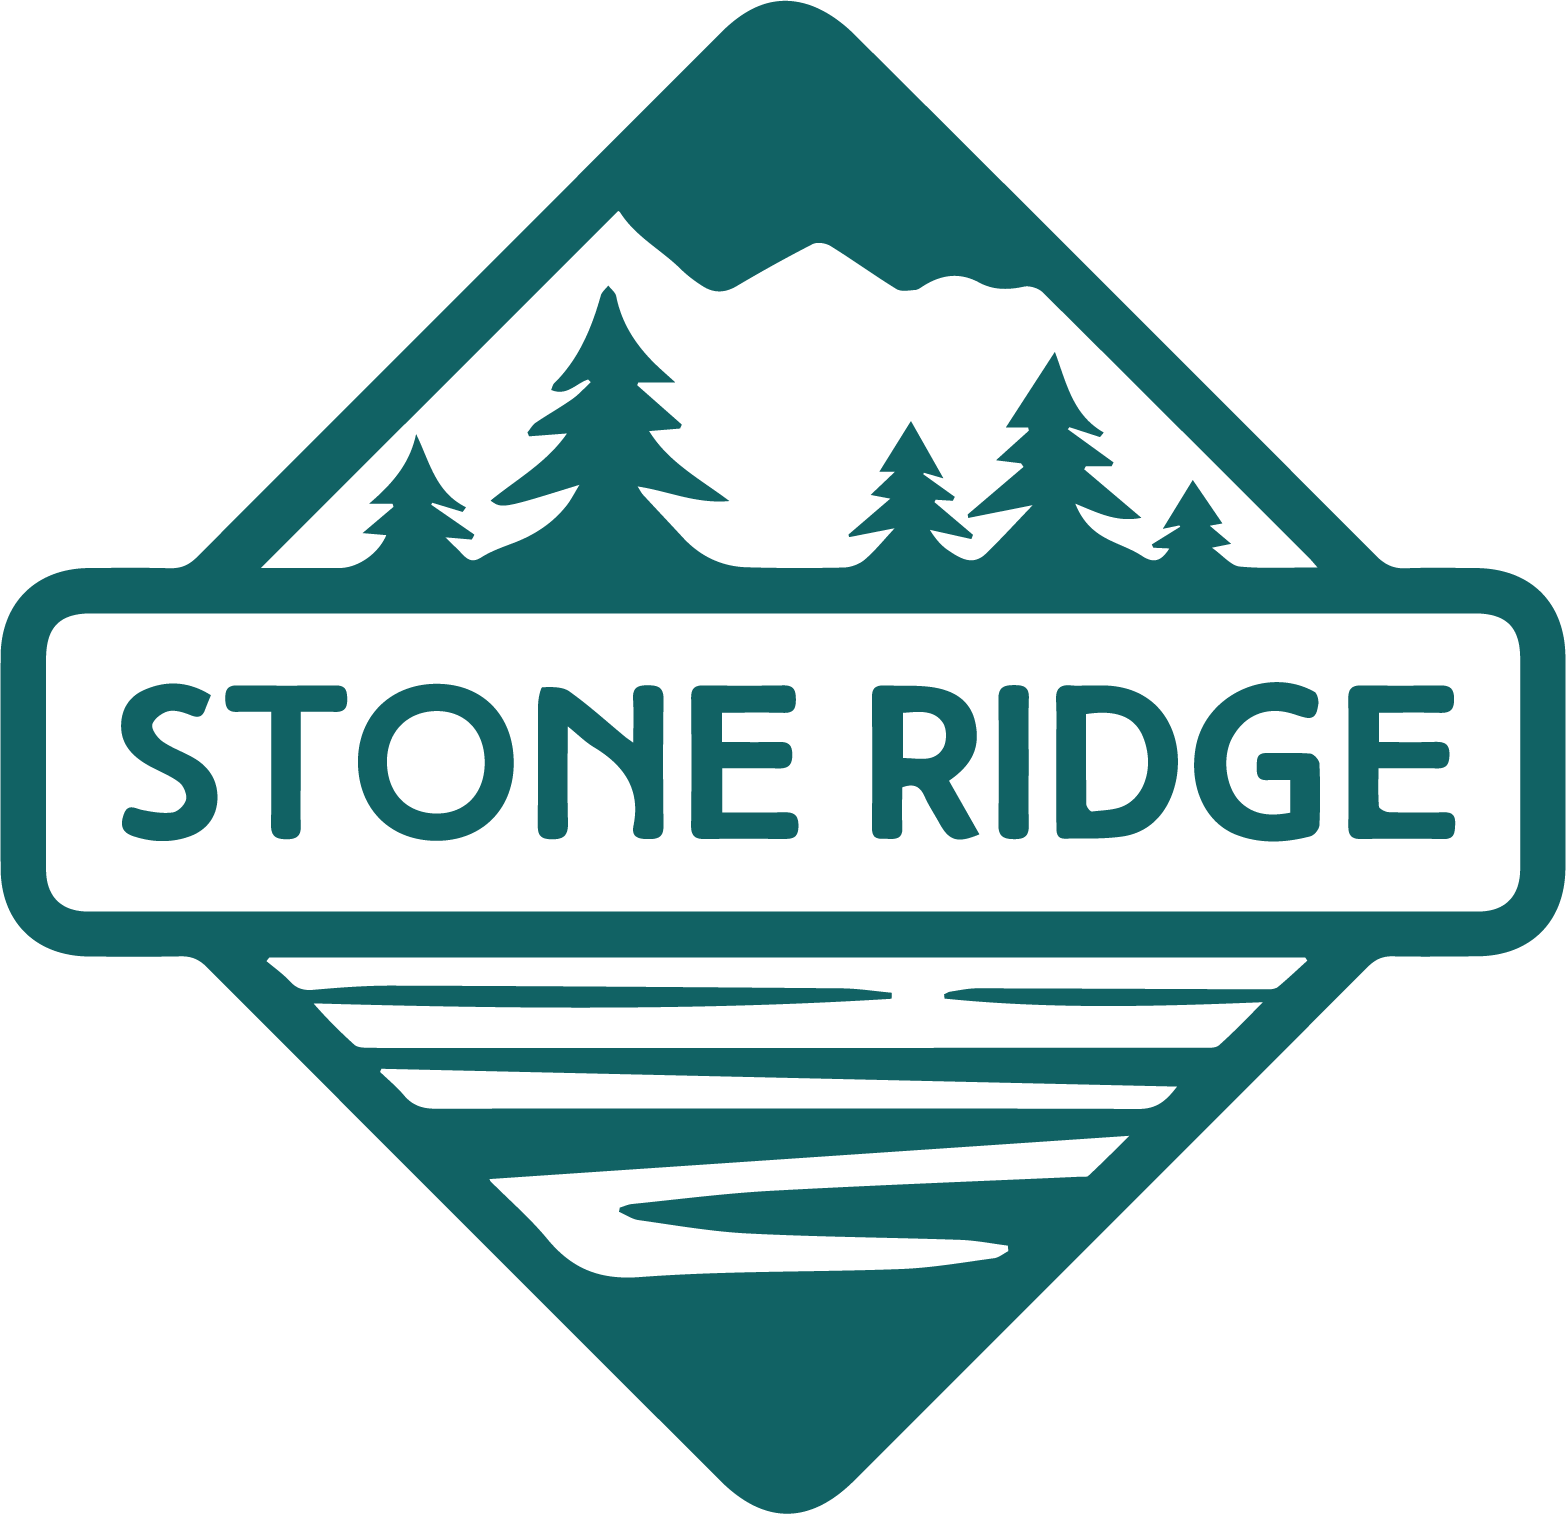 Stone Ridge